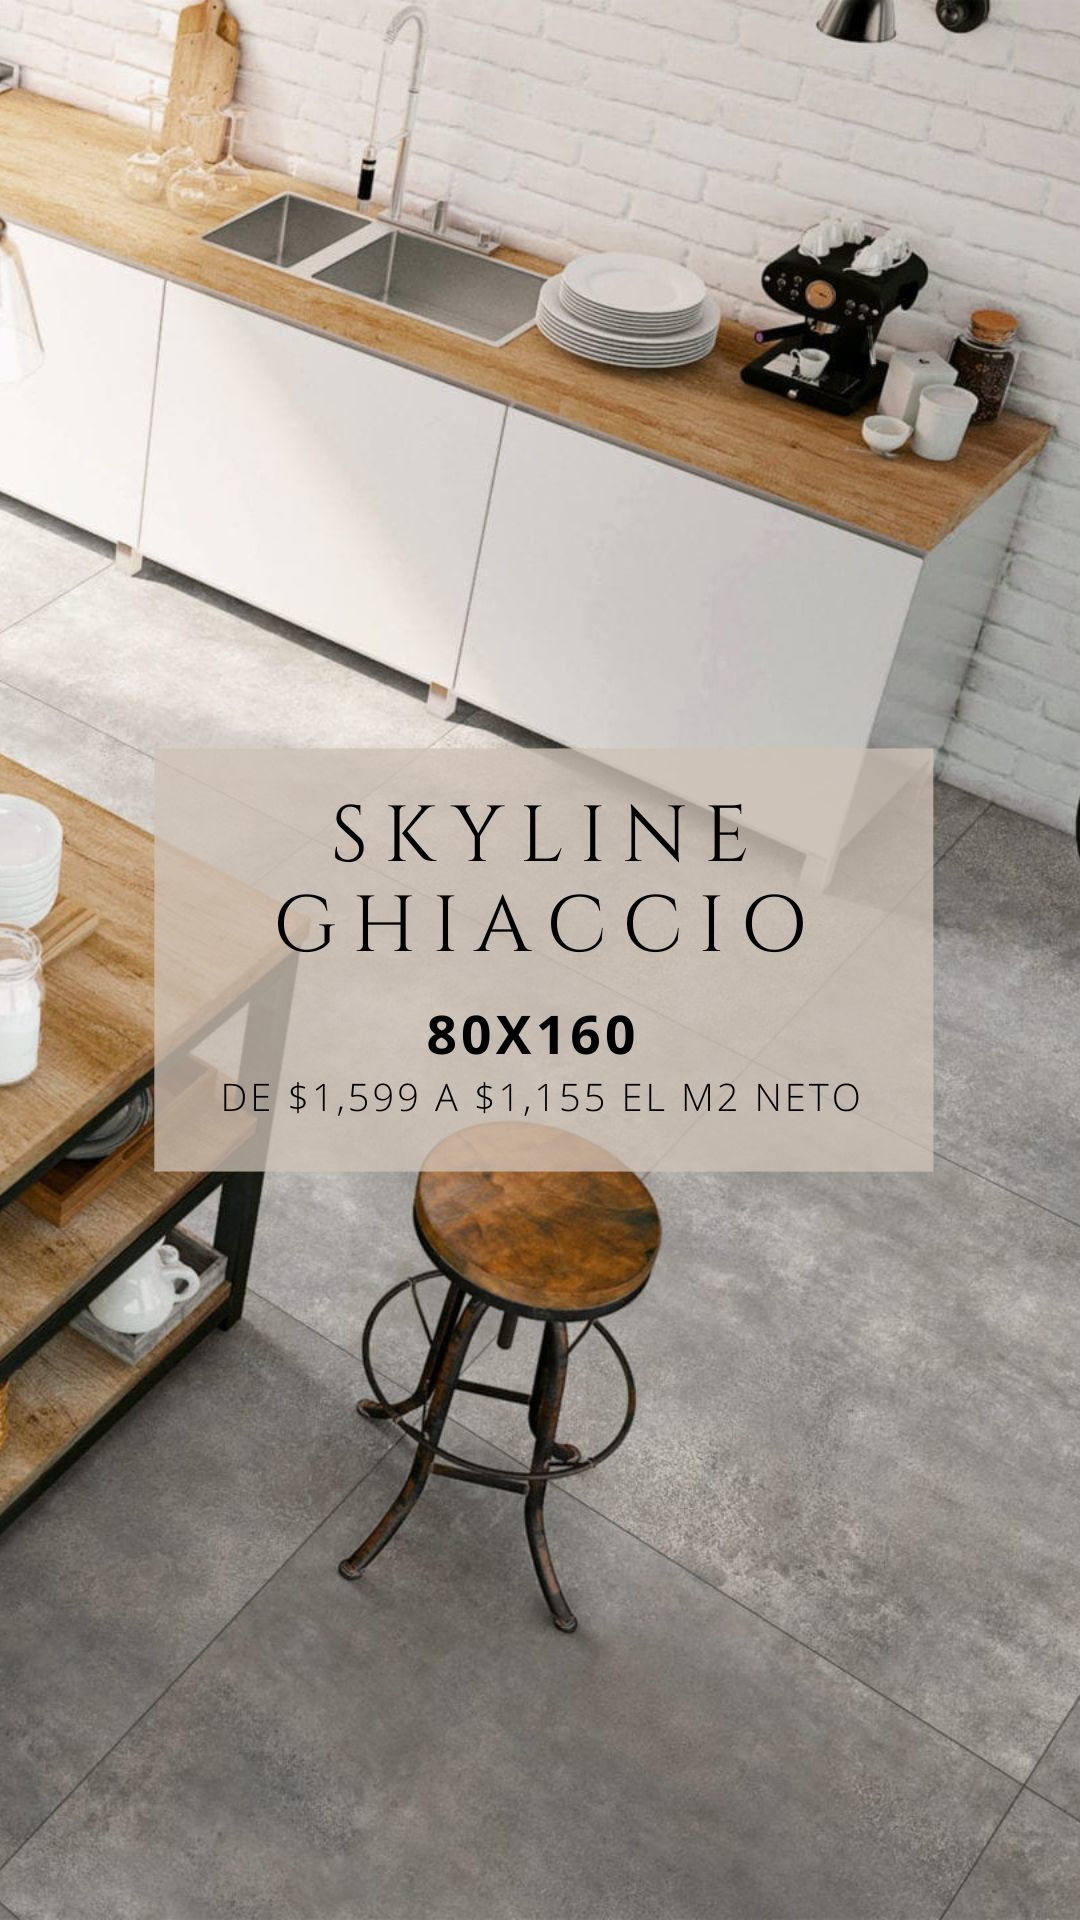 Skyline Ghiaccio